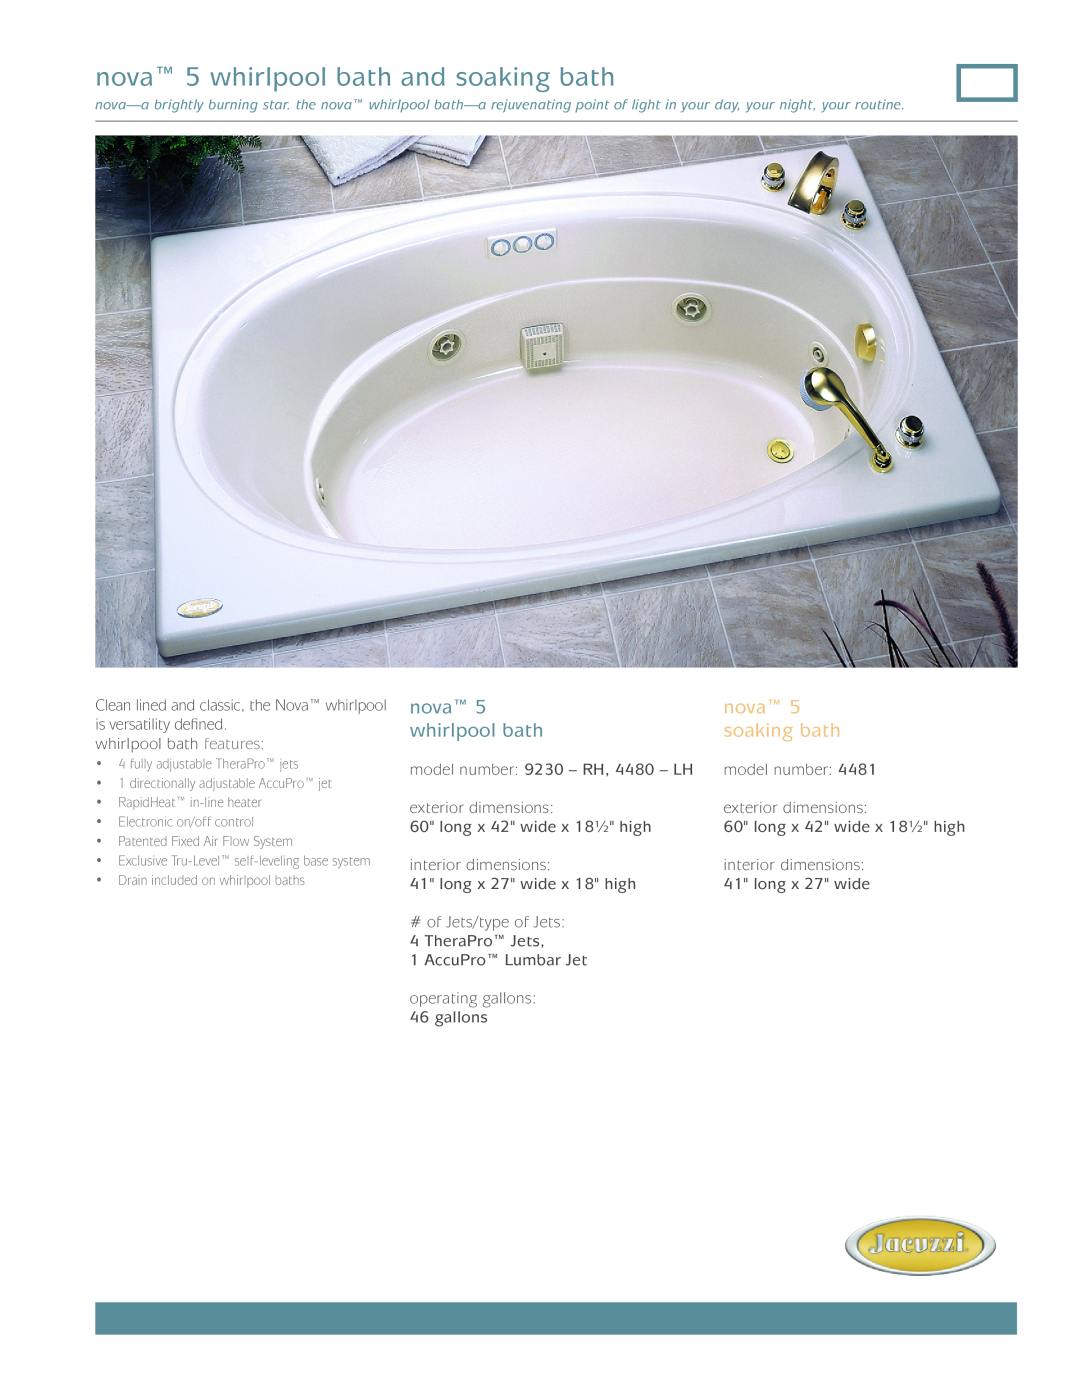 Jacuzzi 4481, 9230-RH, 4480-LH dimensions nova 5 whirlpool bath and soaking bath 